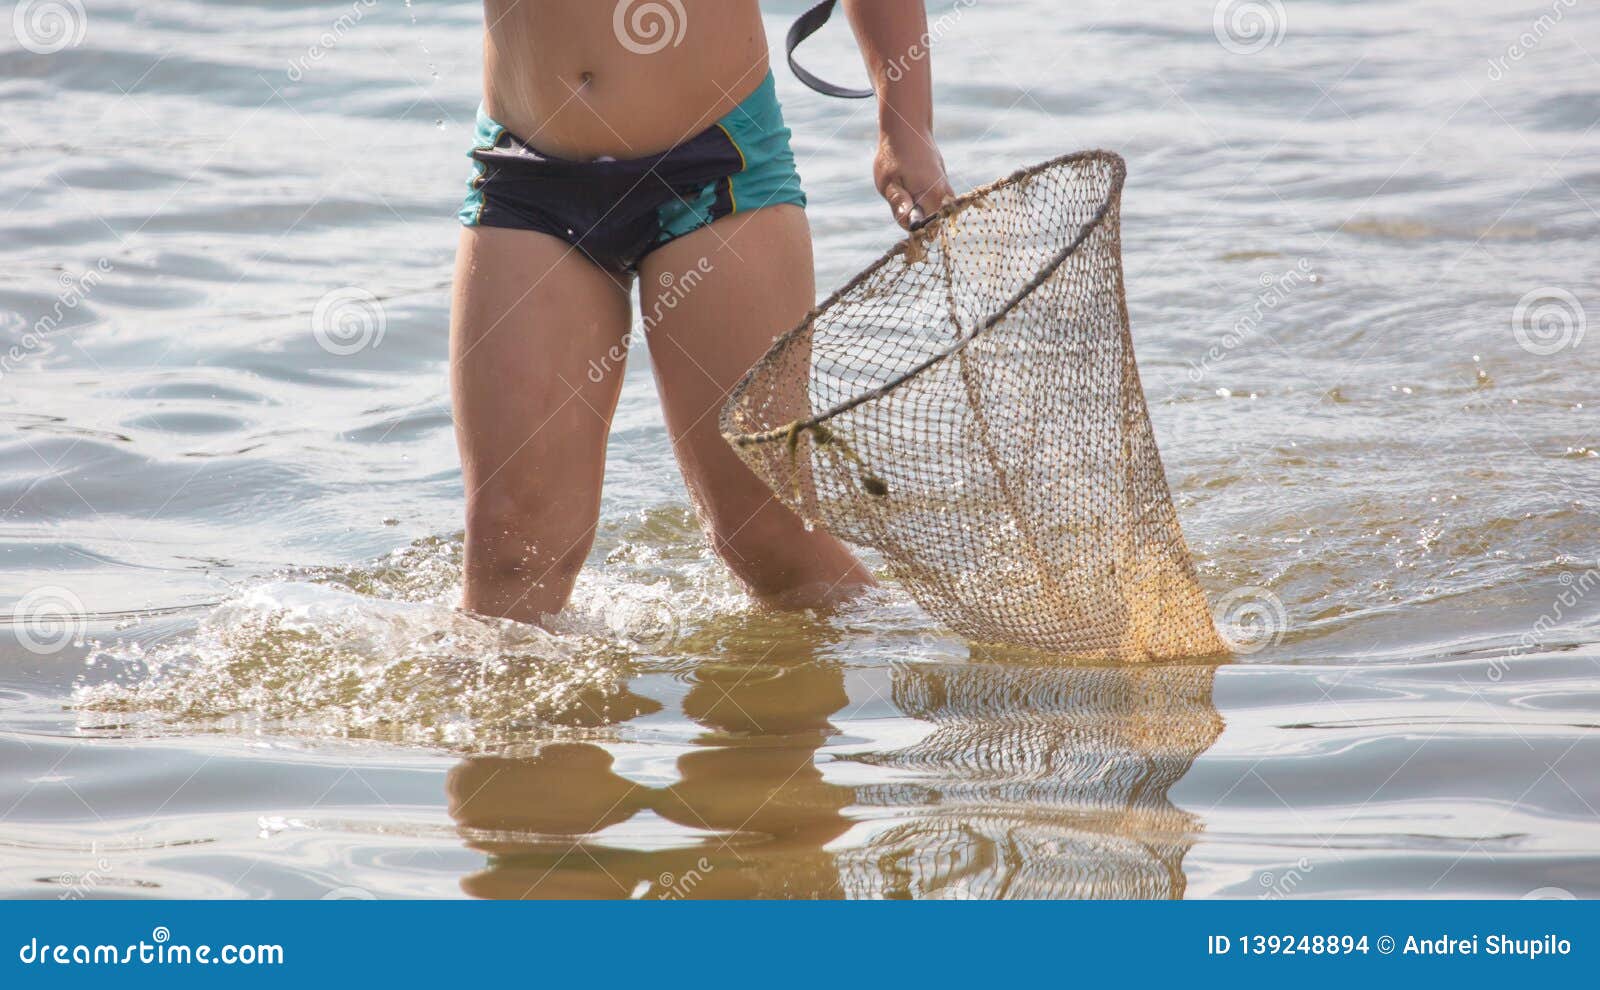 girl in fishing net playing herself